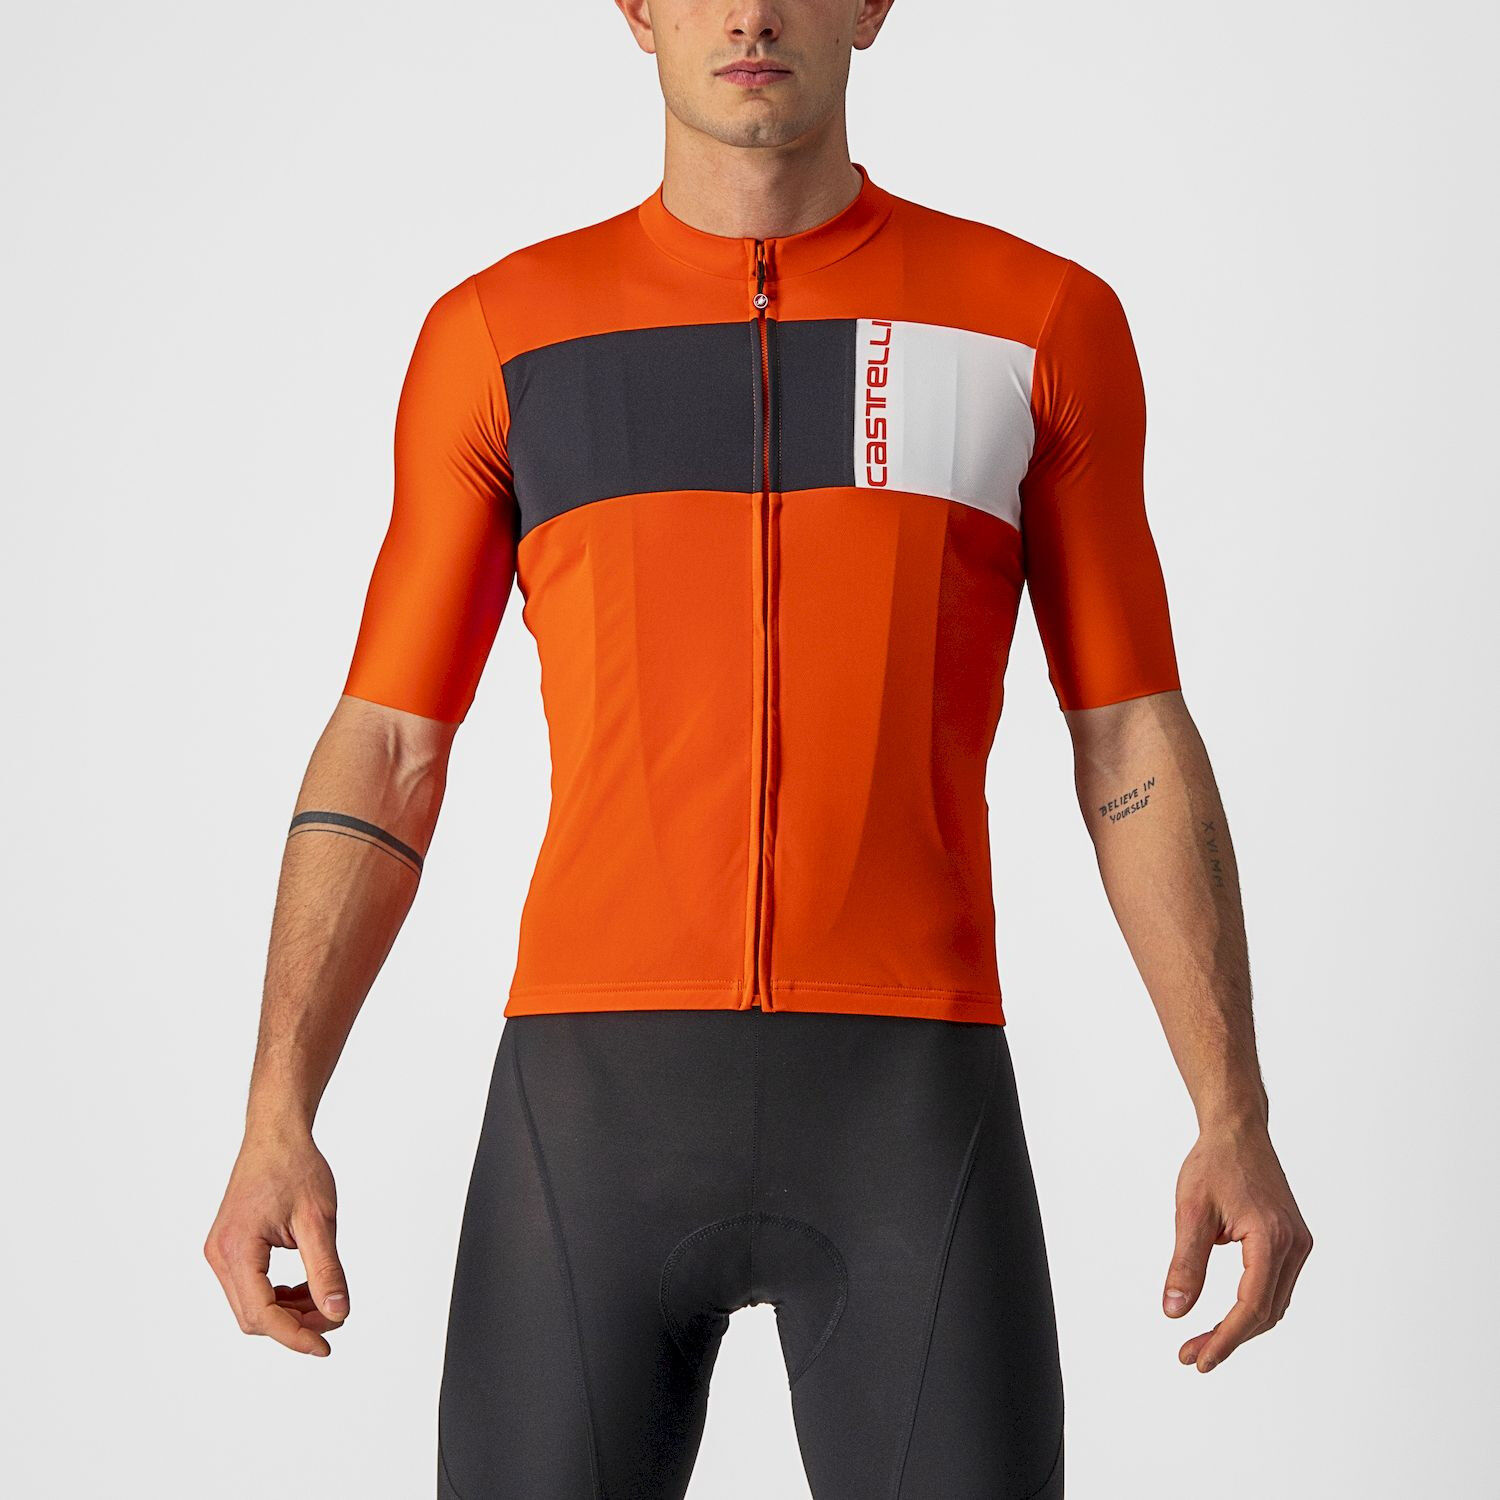 Castelli Prologo 7 - Cycling jersey - Men's